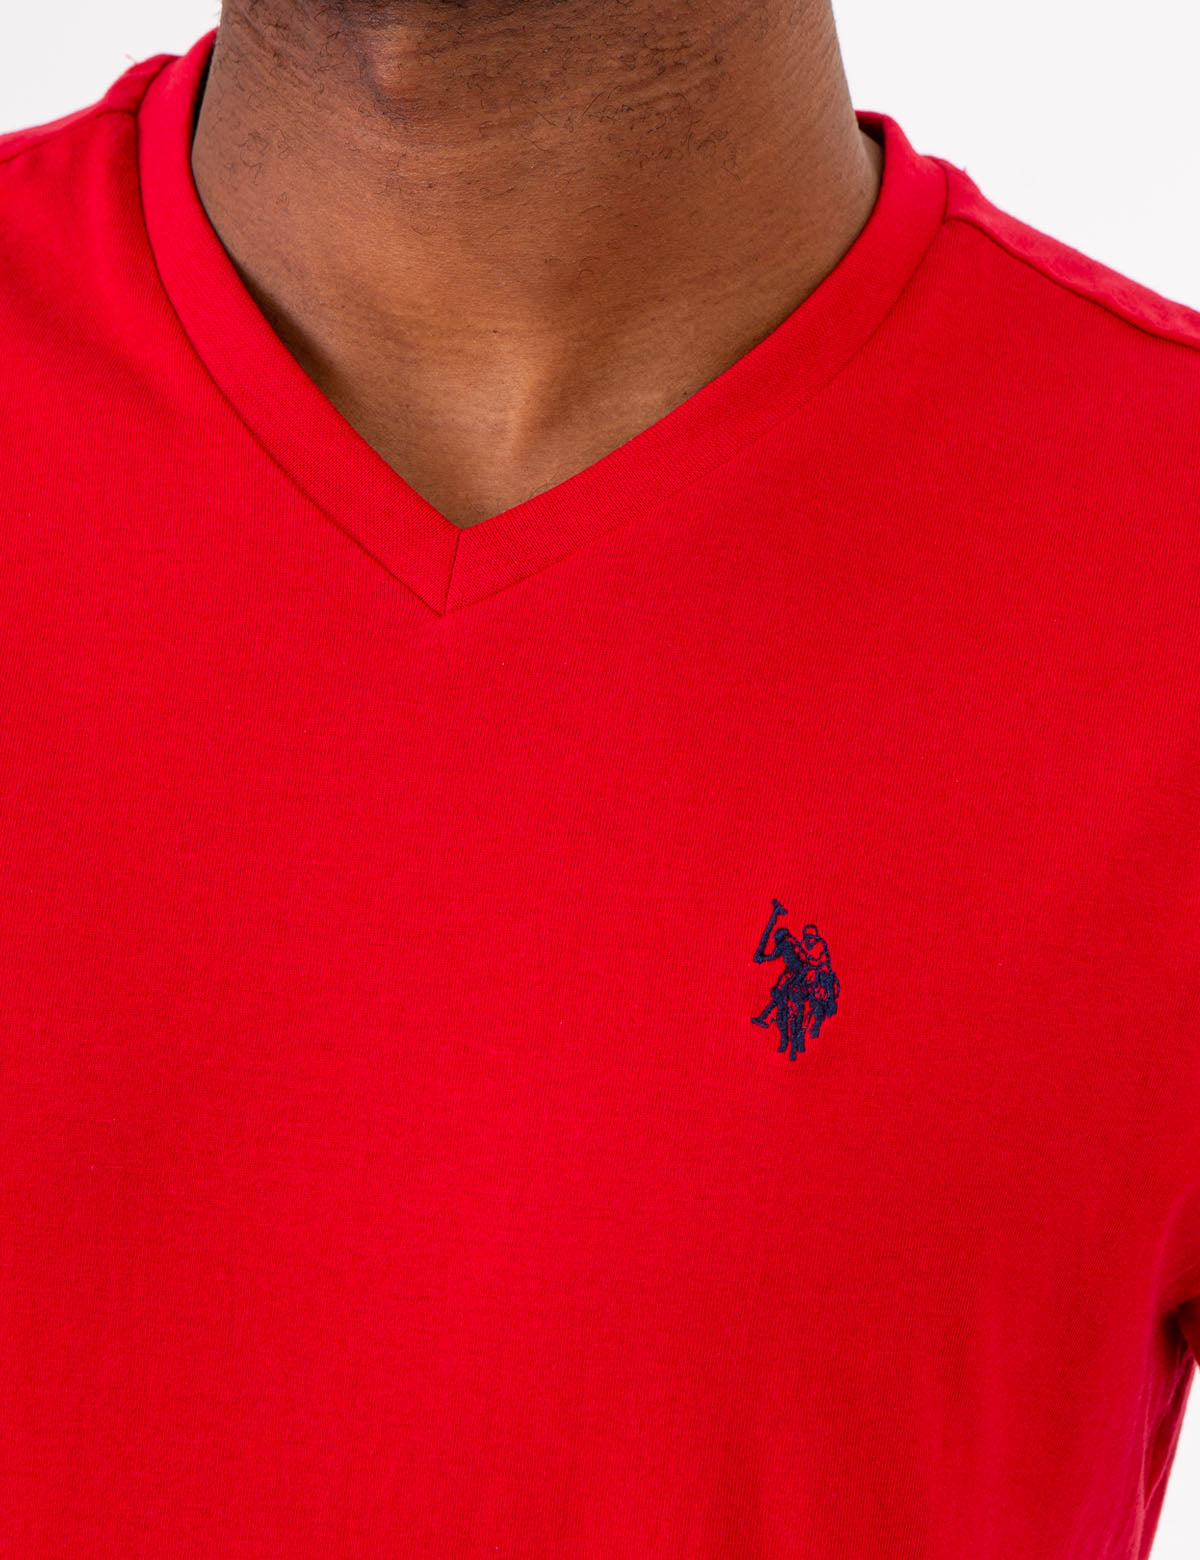 U.S. Polo Assn. Men's V-Neck T-Shirt - image 4 of 4